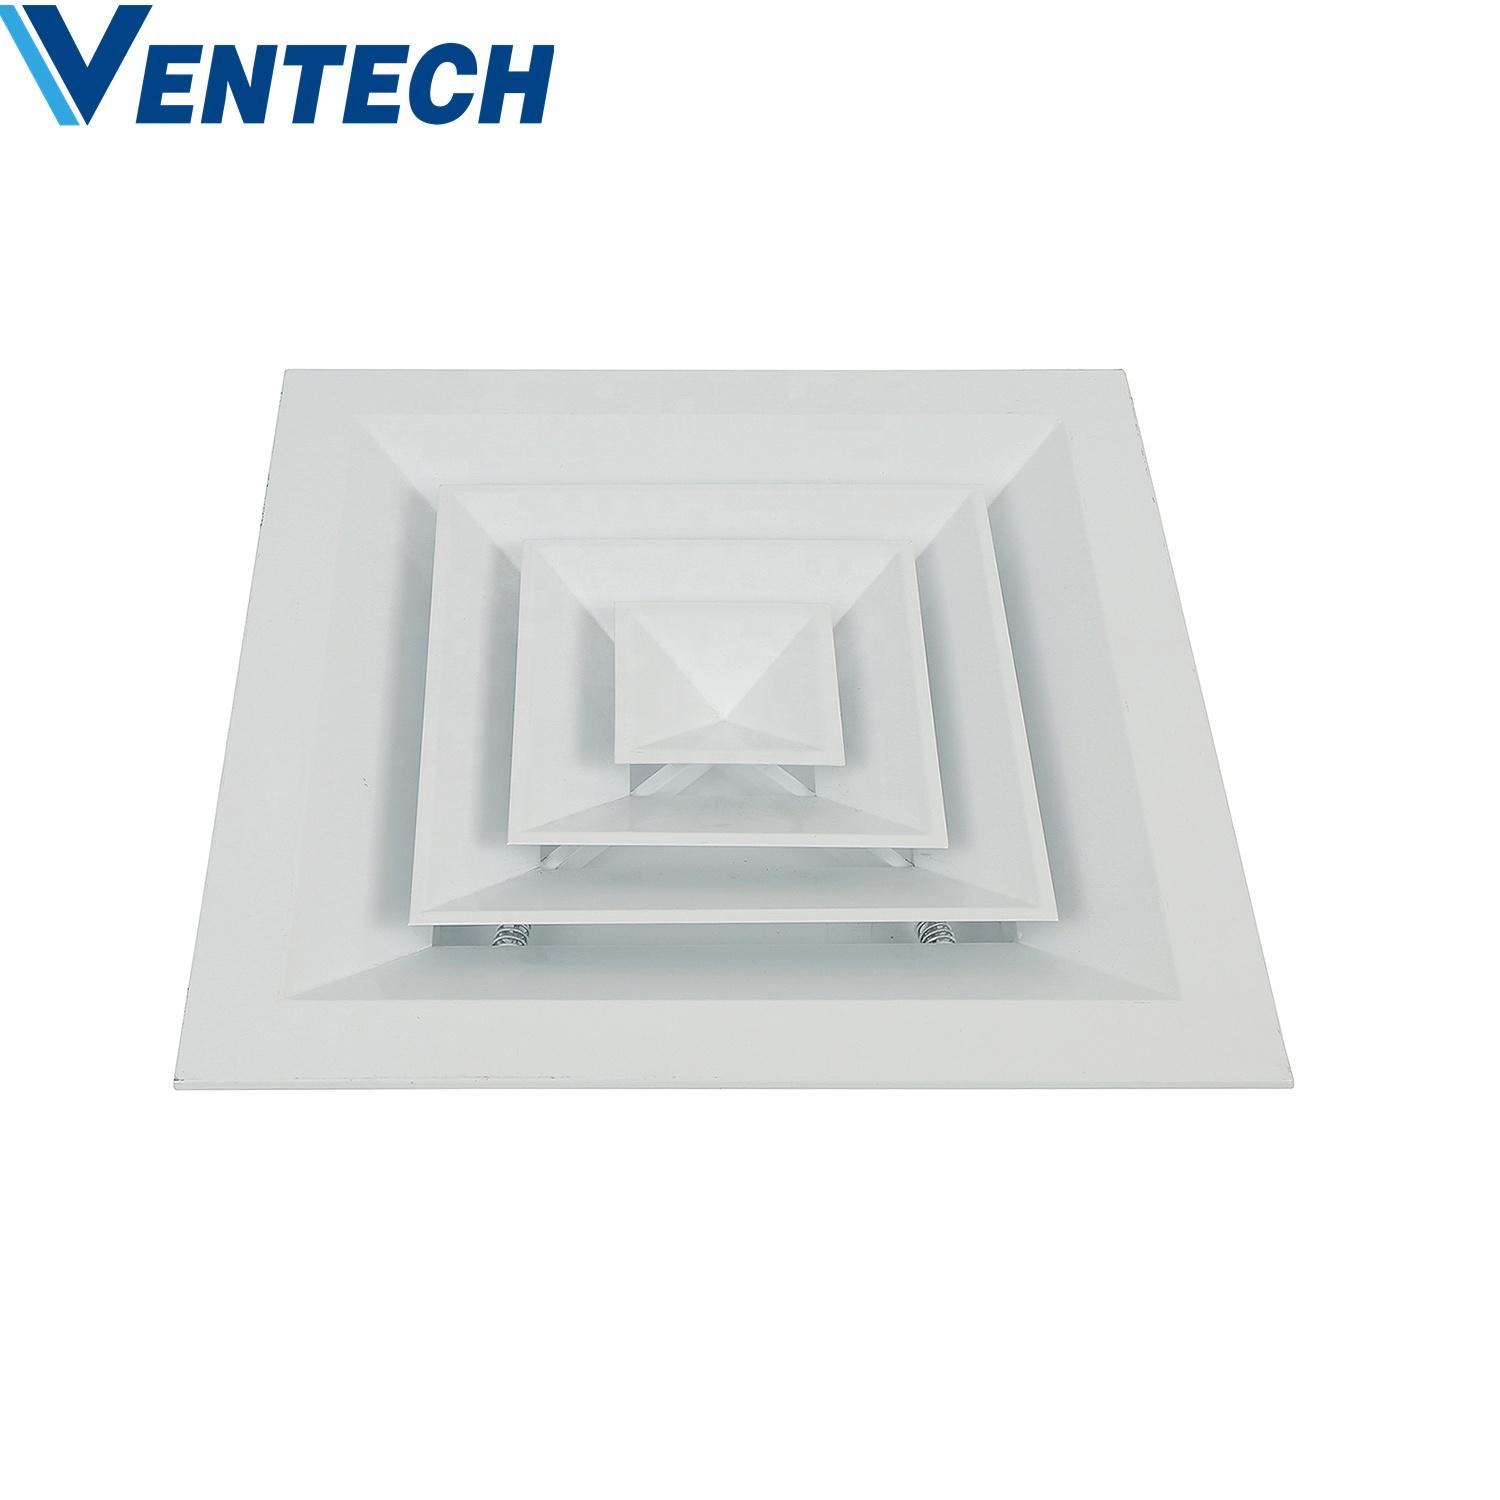 Hvac System VENTECH Supply Air Diffuser Aluminum Square Ceiling Air Diffusers